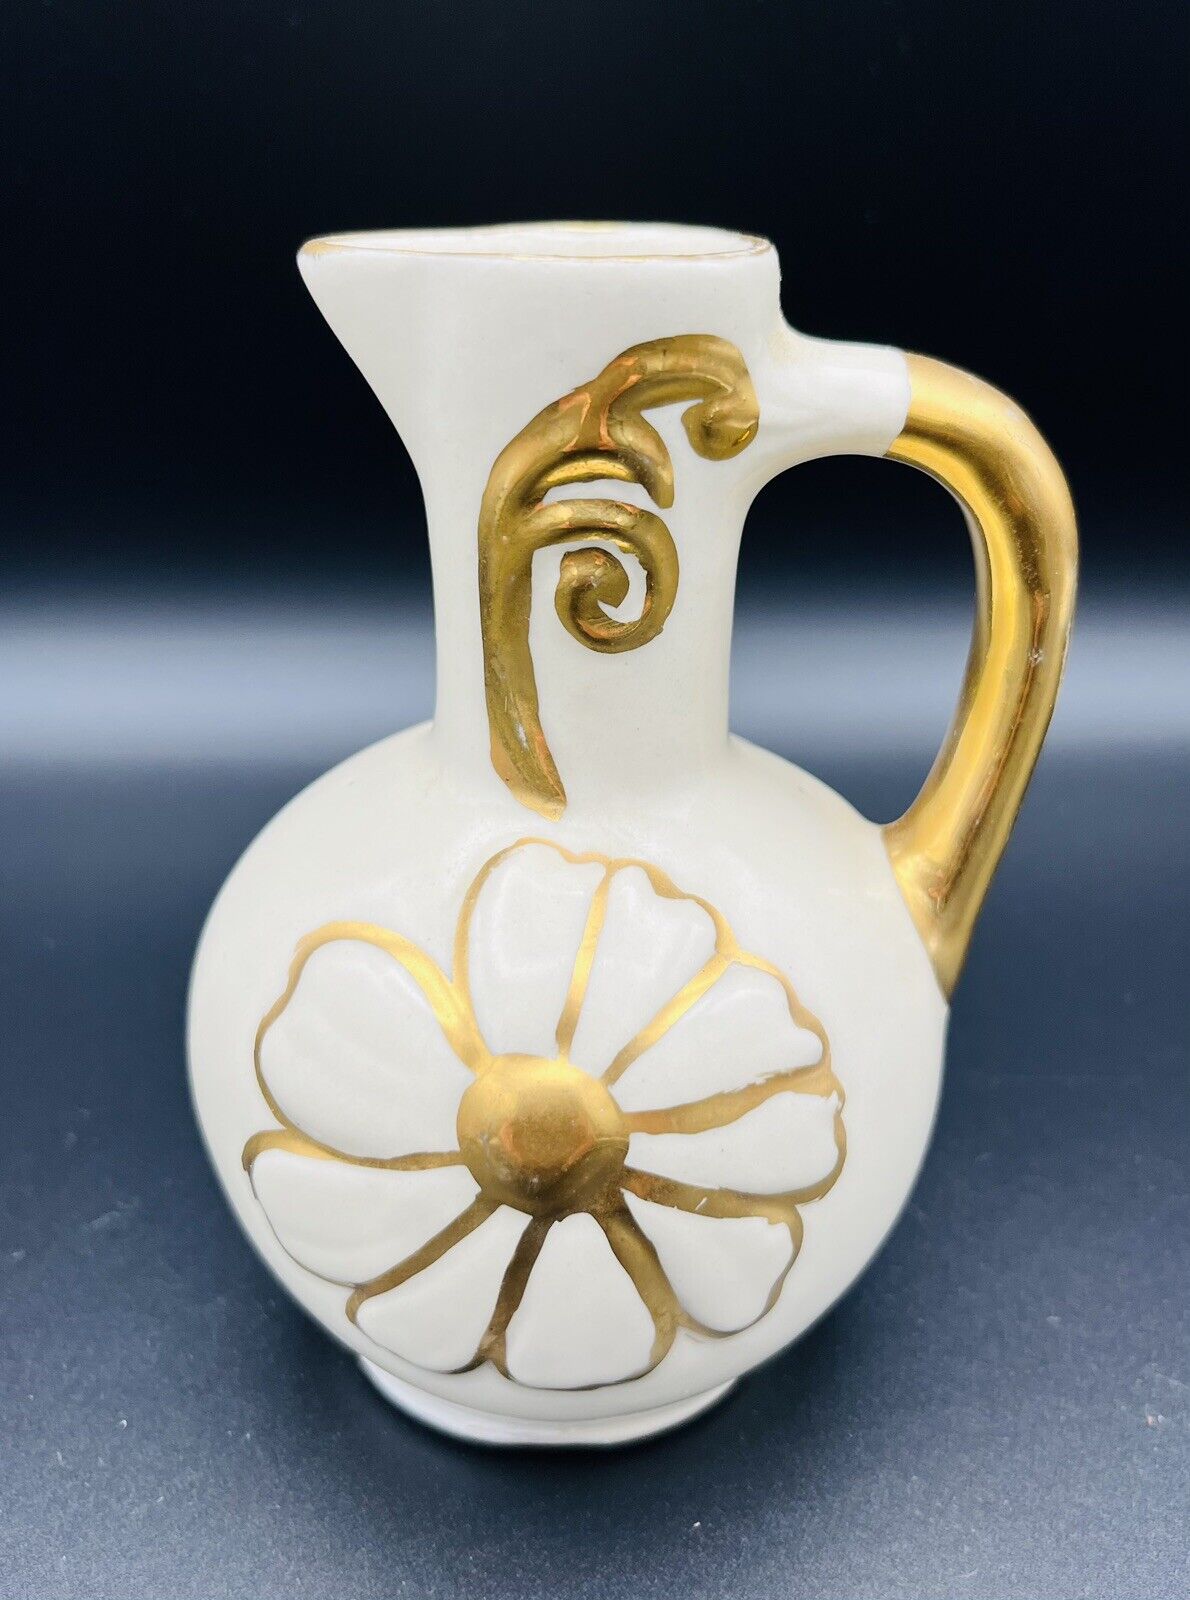 Vintage Ceramic Bud Vase Creamer - Cream with Gold Color Floral Accent